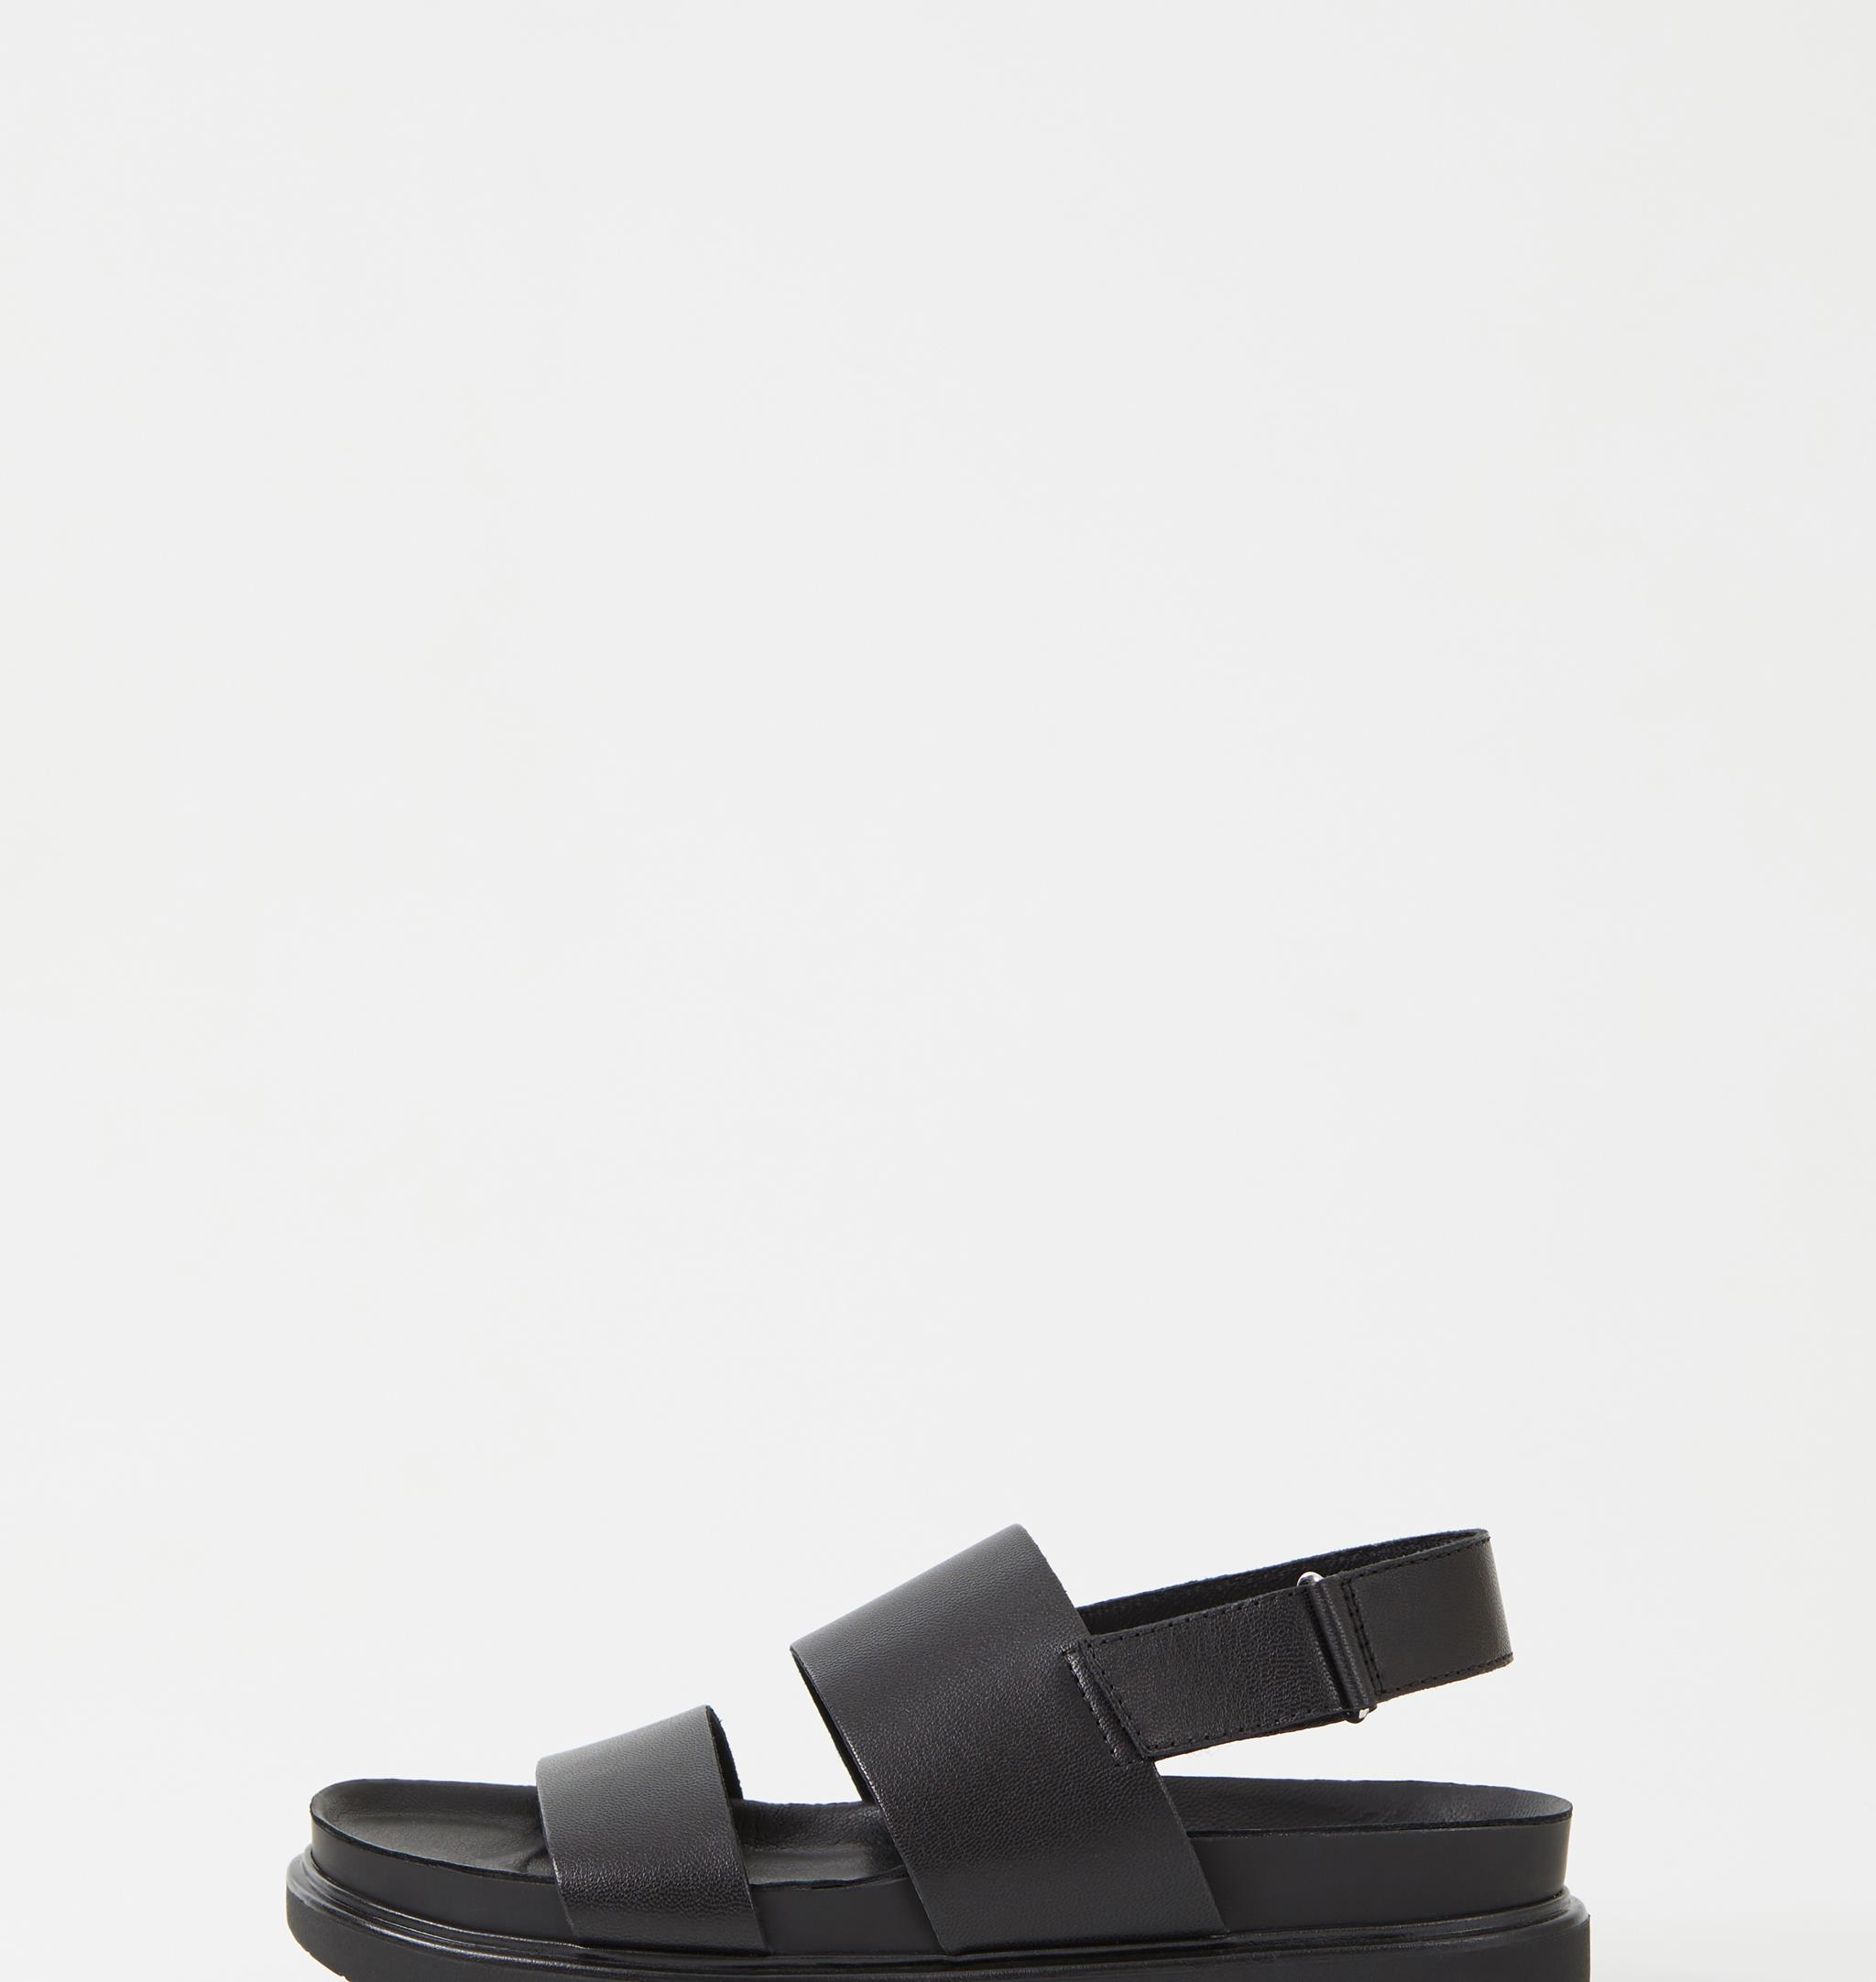 marmorering bredde blok Erin - Black Sandals Woman | Vagabond